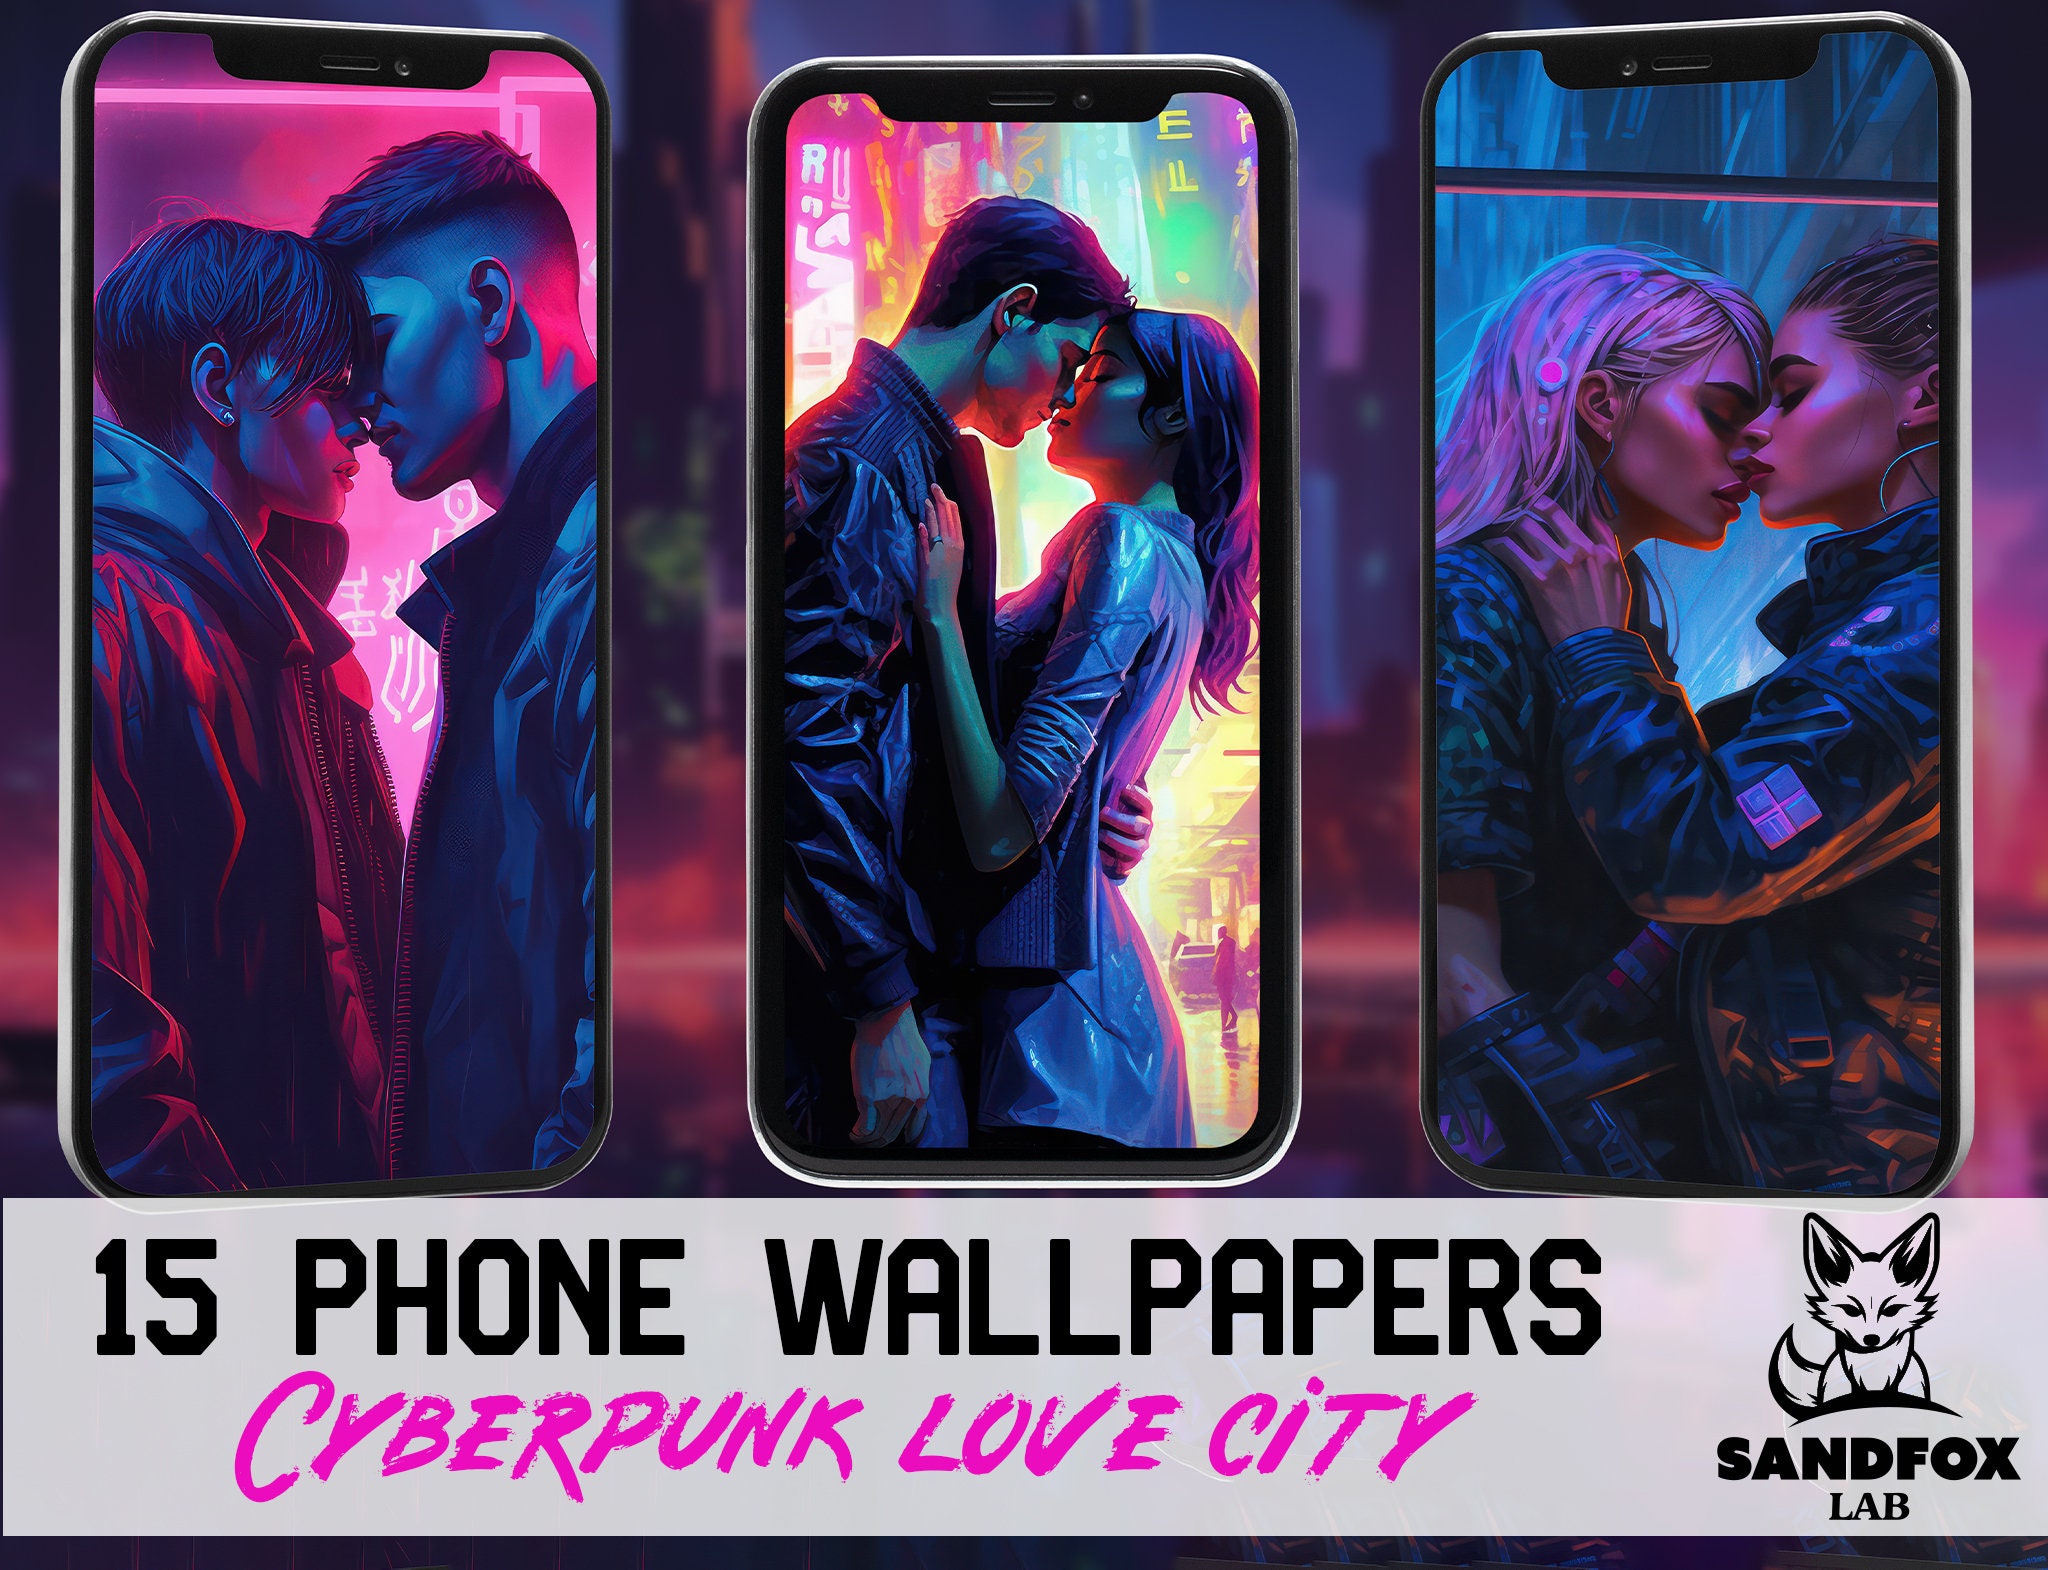 Cyberpunk phone wallpapers